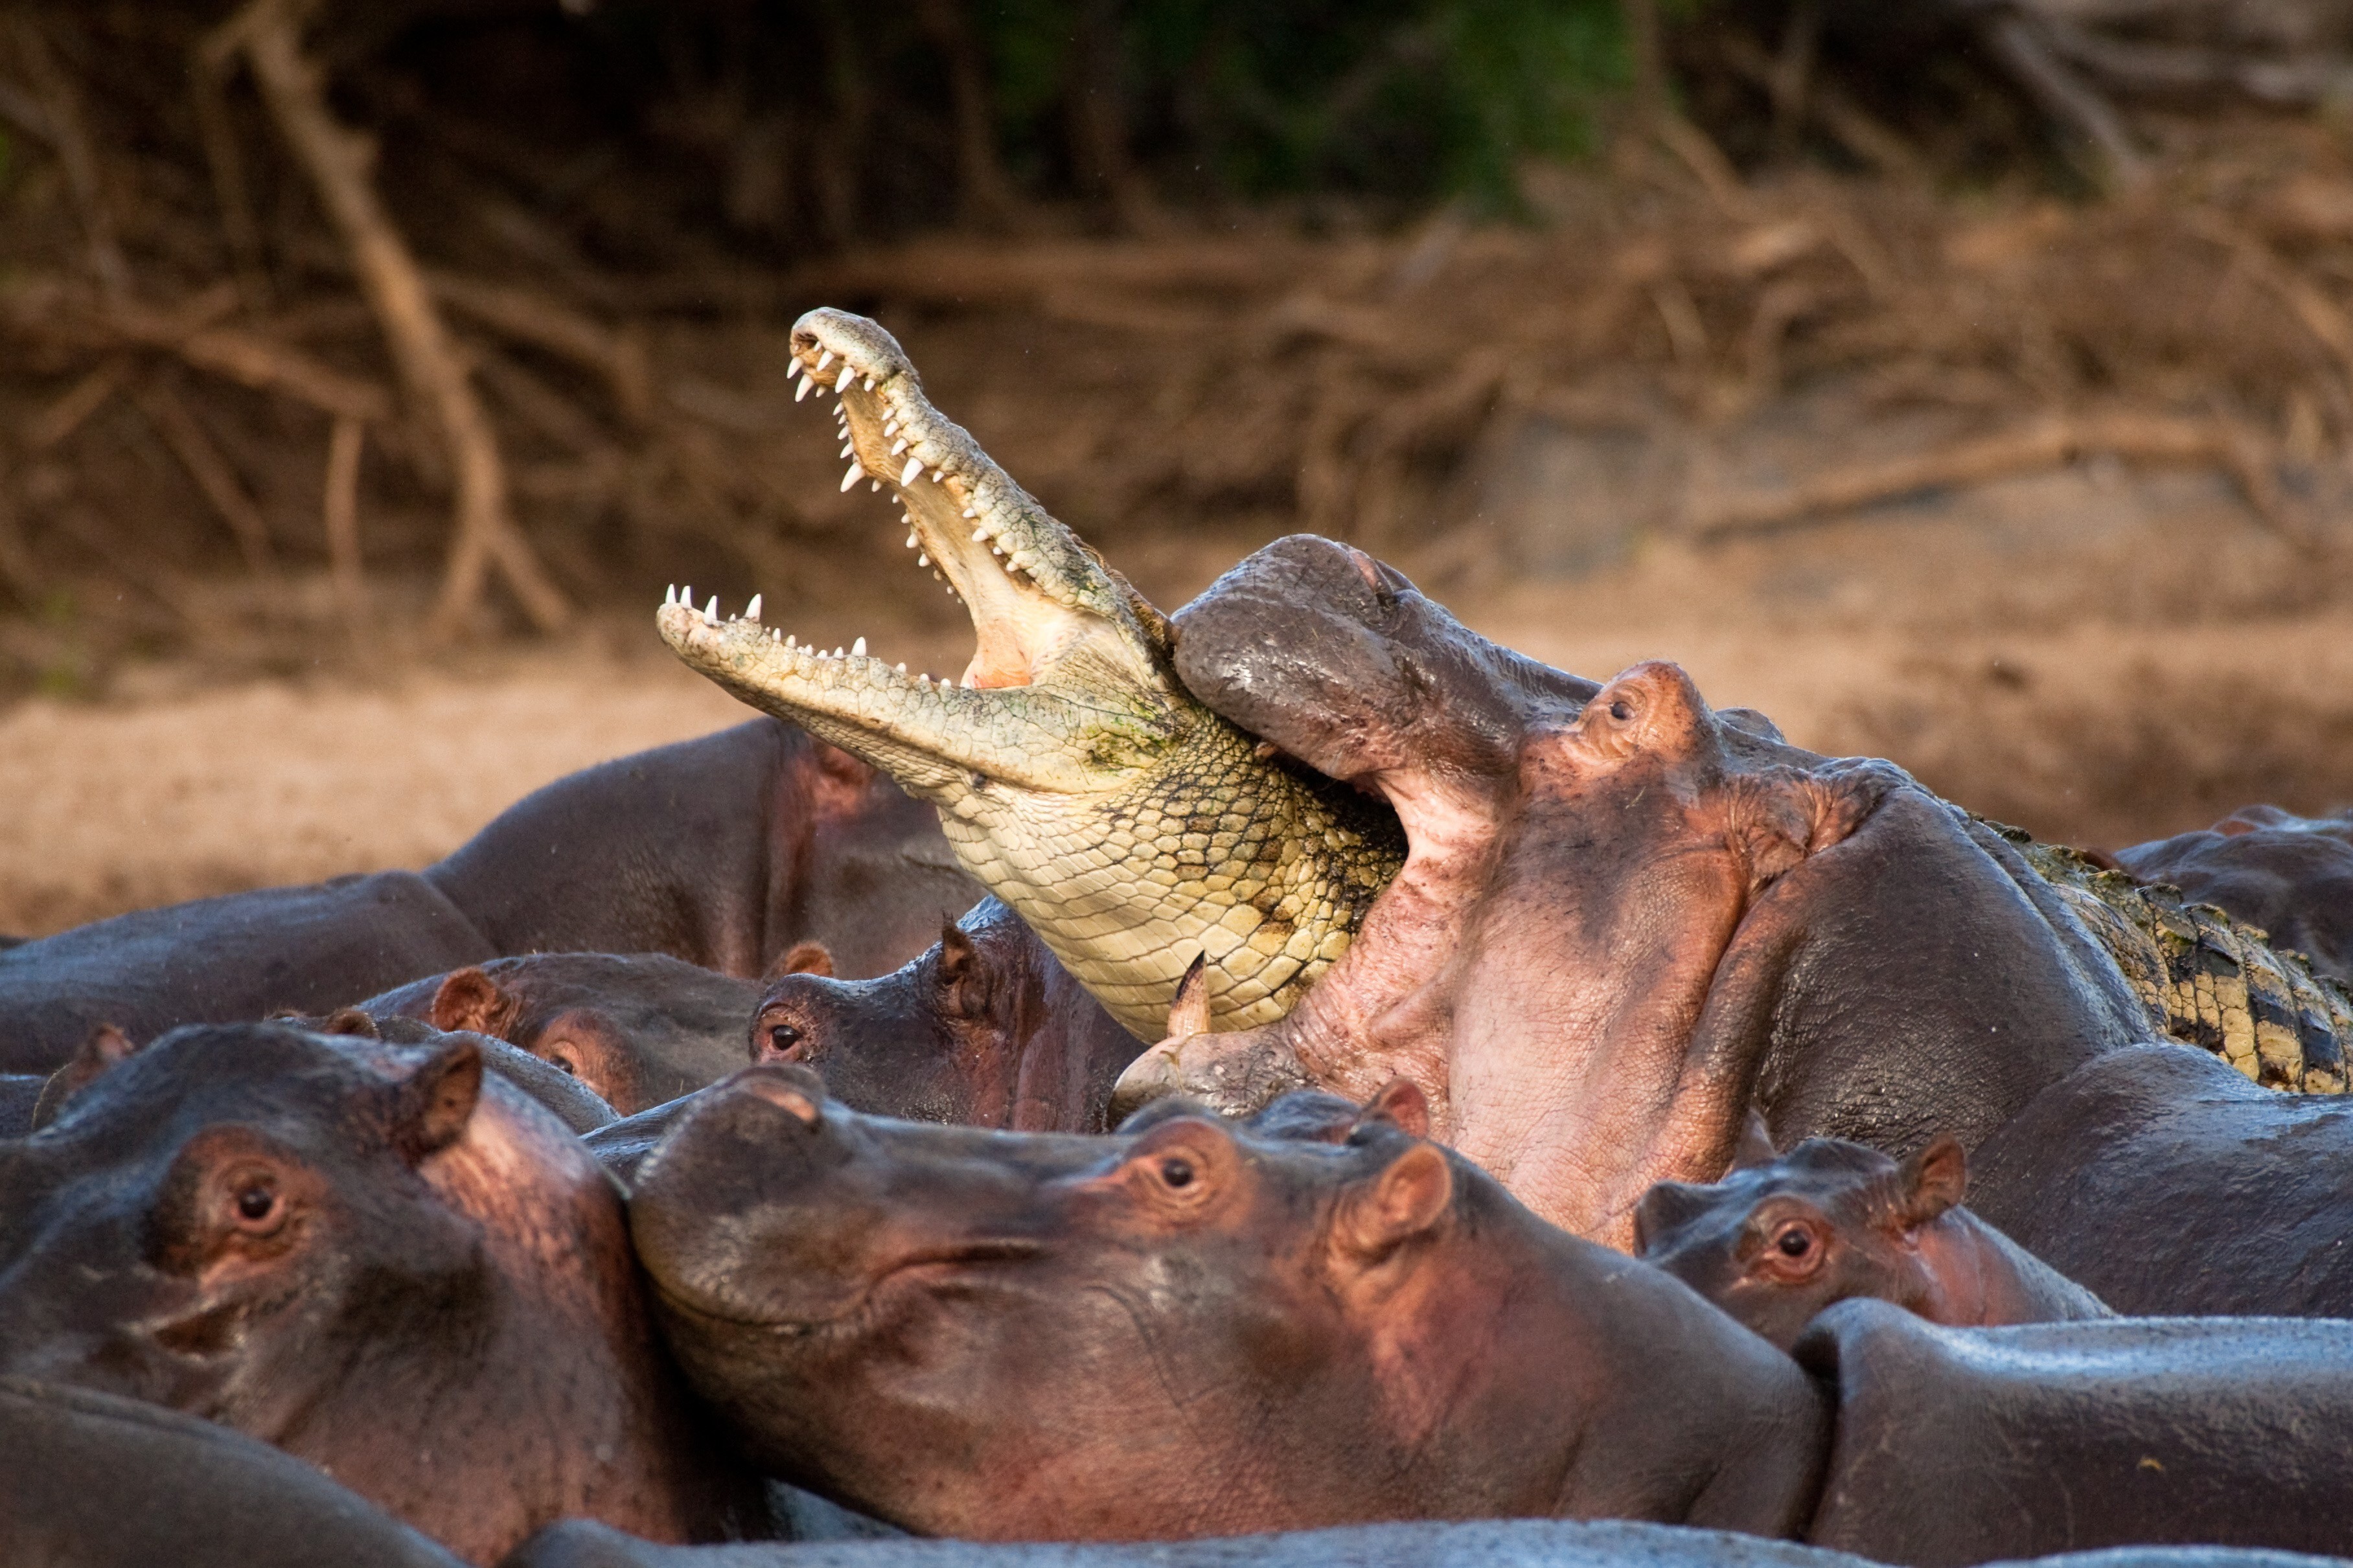 General 3632x2421 animals hippos crocodiles reptiles nature biting branch